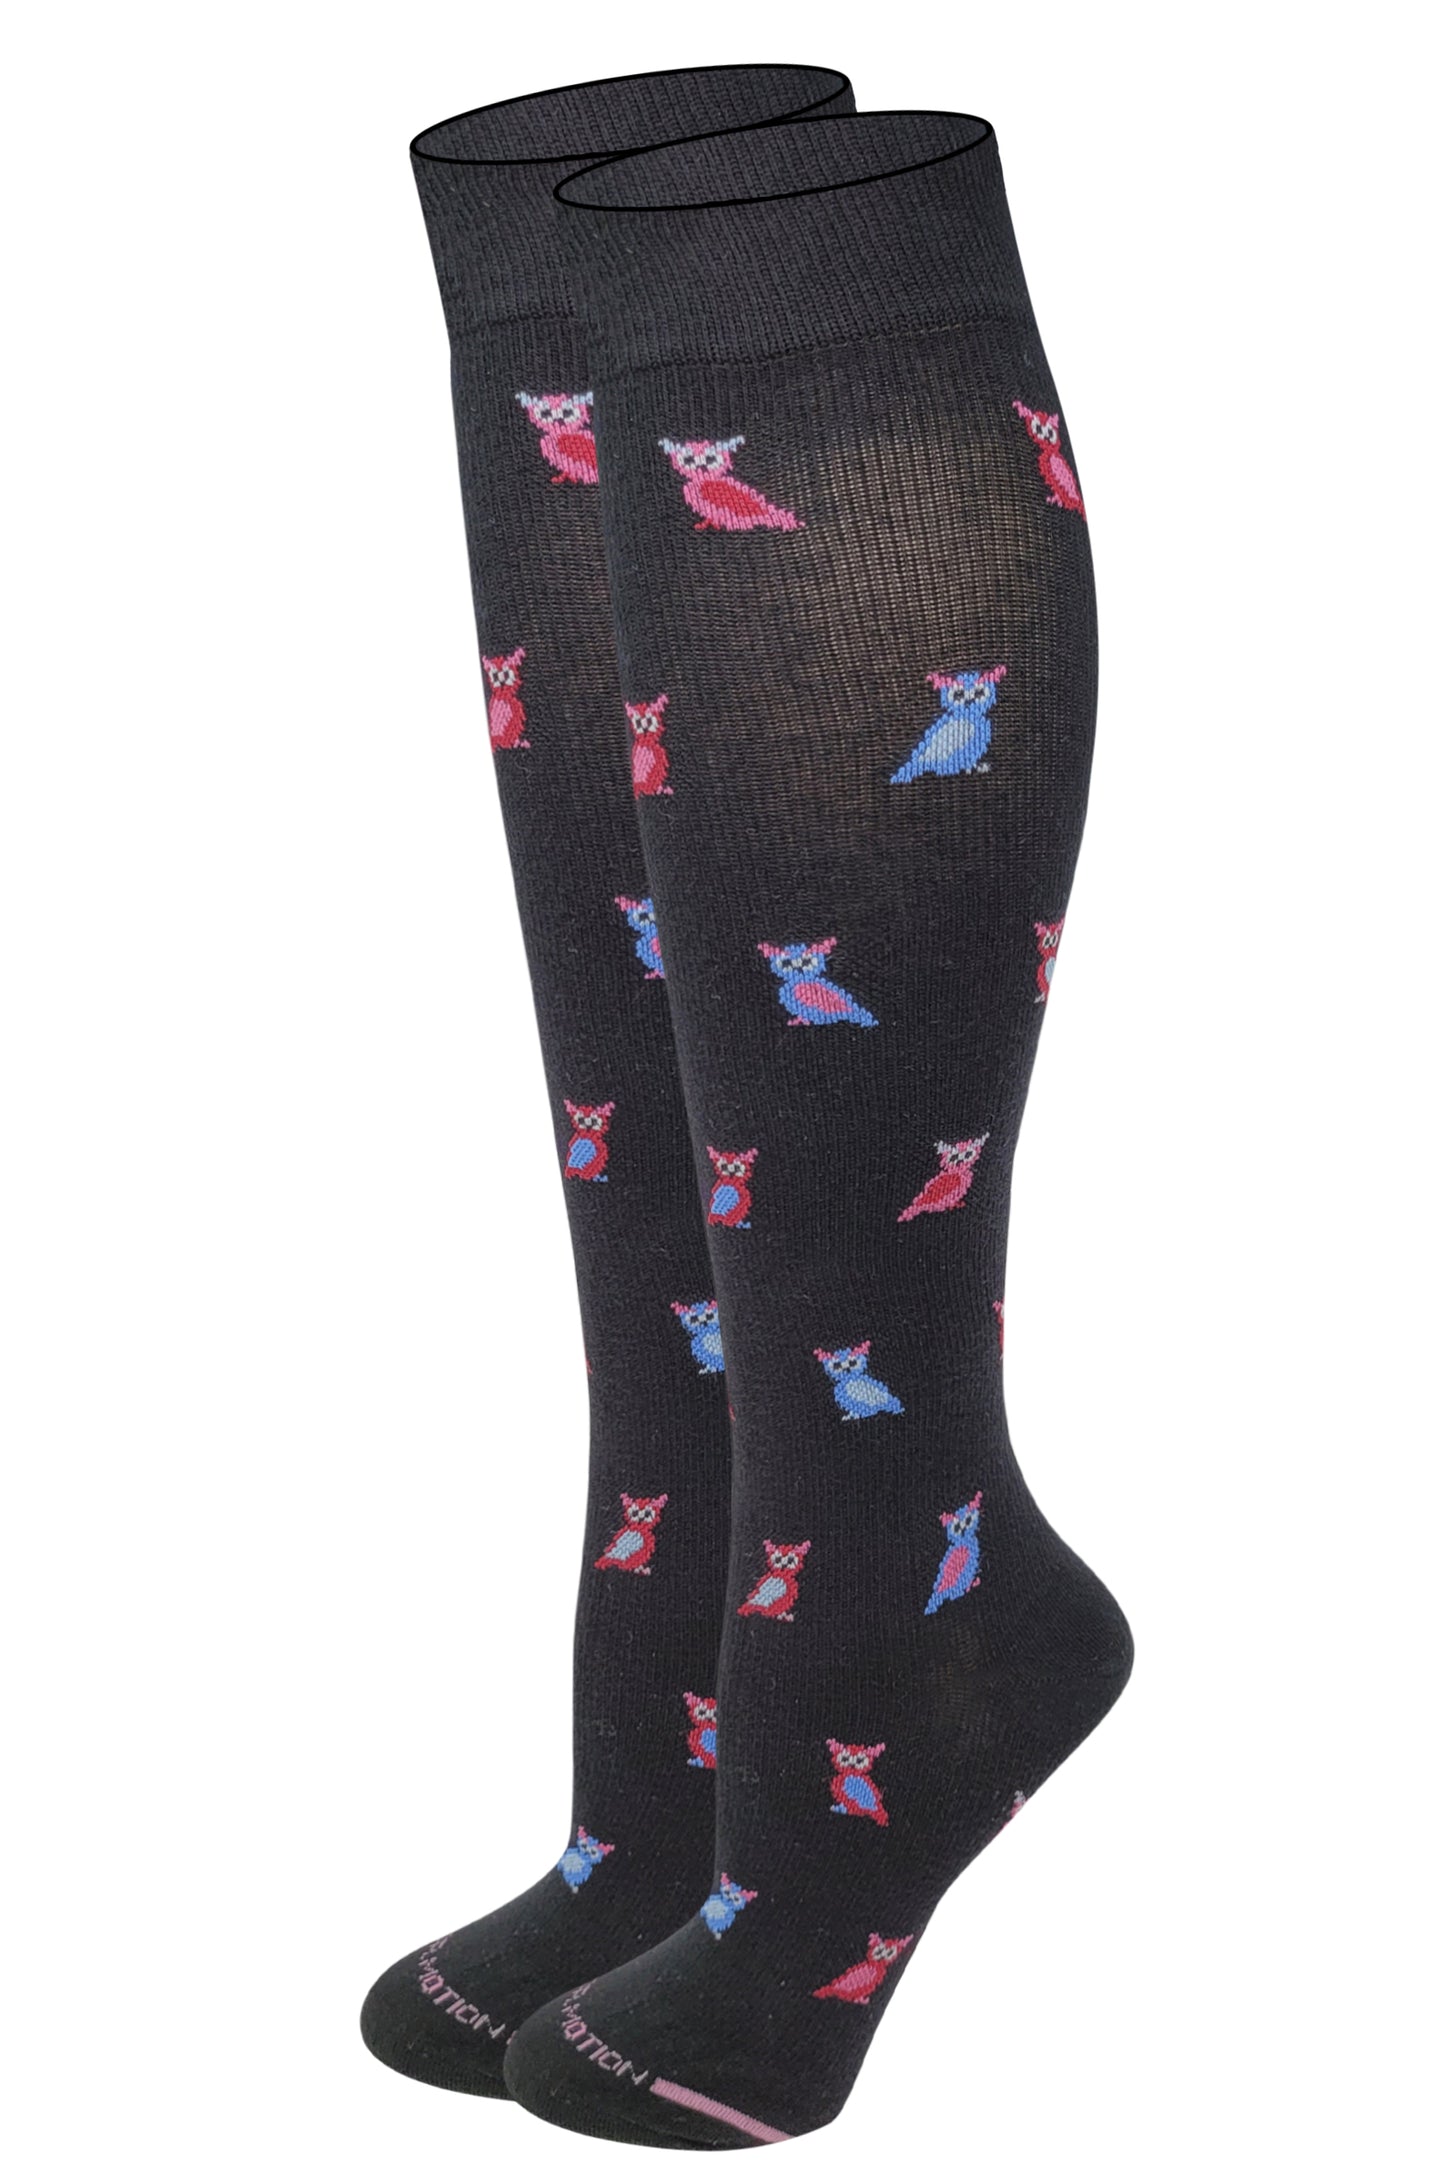 Knee High Compression Socks | Owl Design | Women's (1 Pair)